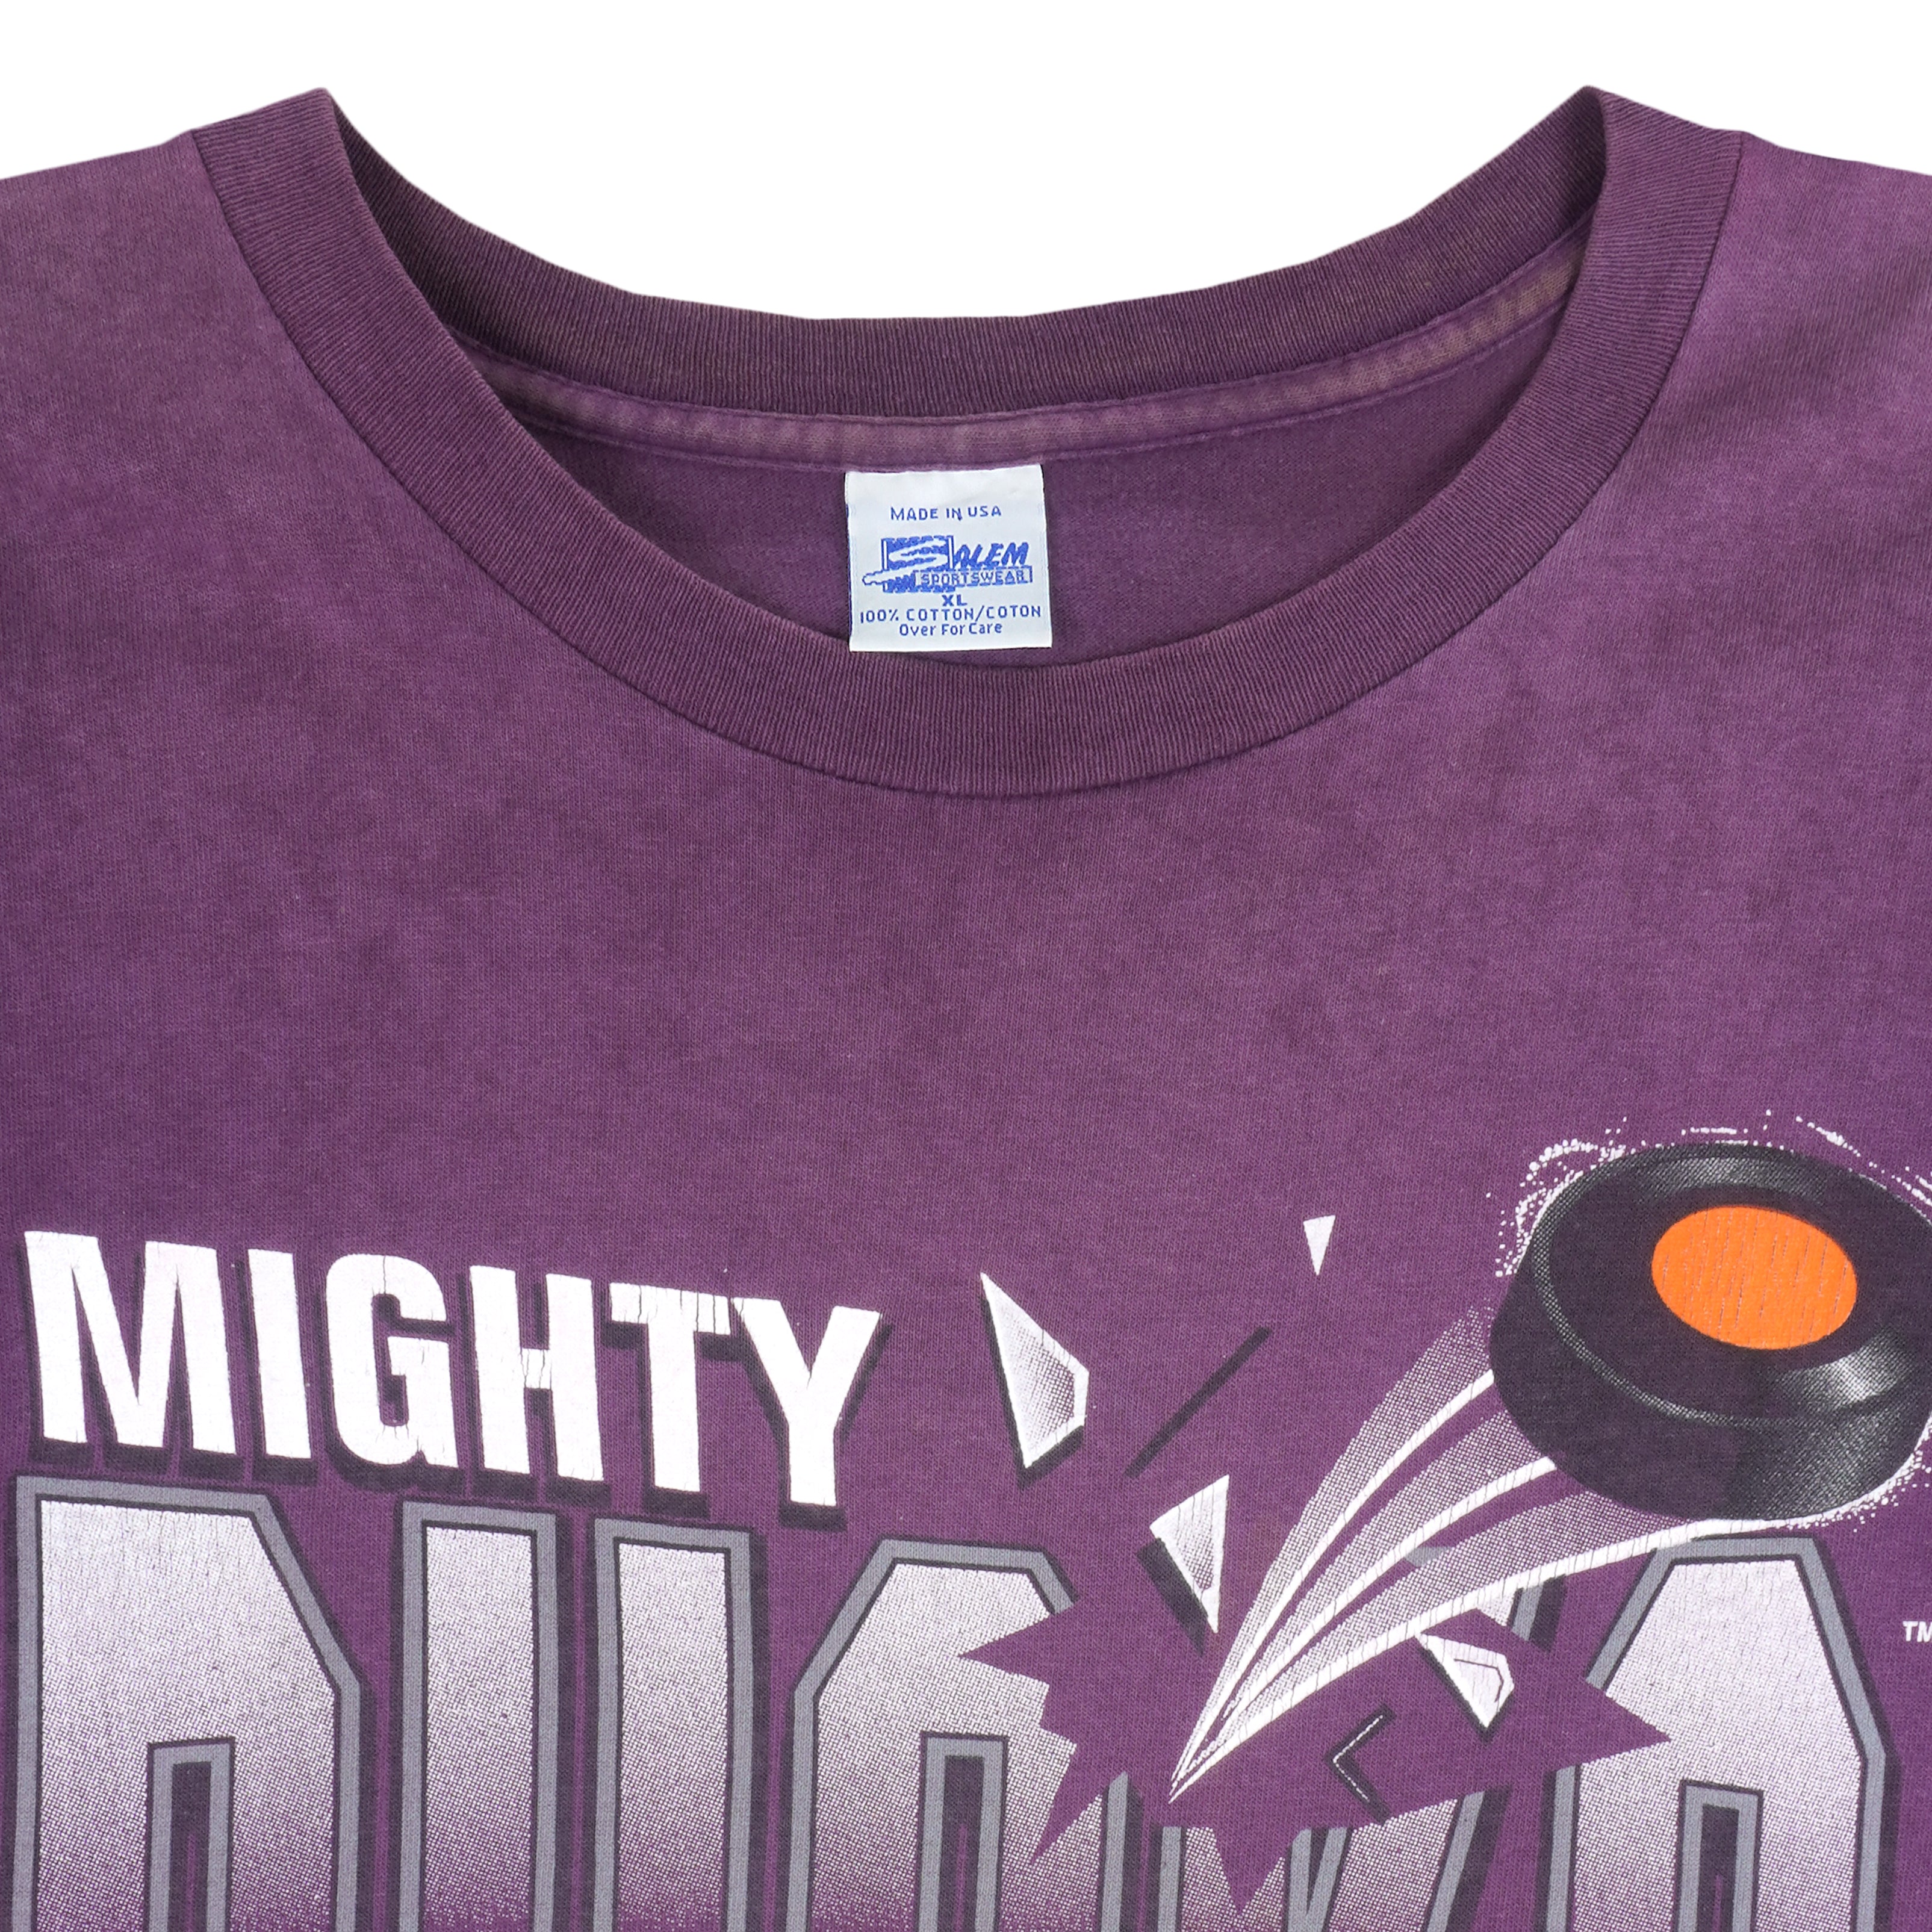 Black and Purple Anaheim Mighty Ducks Varsity Jacket